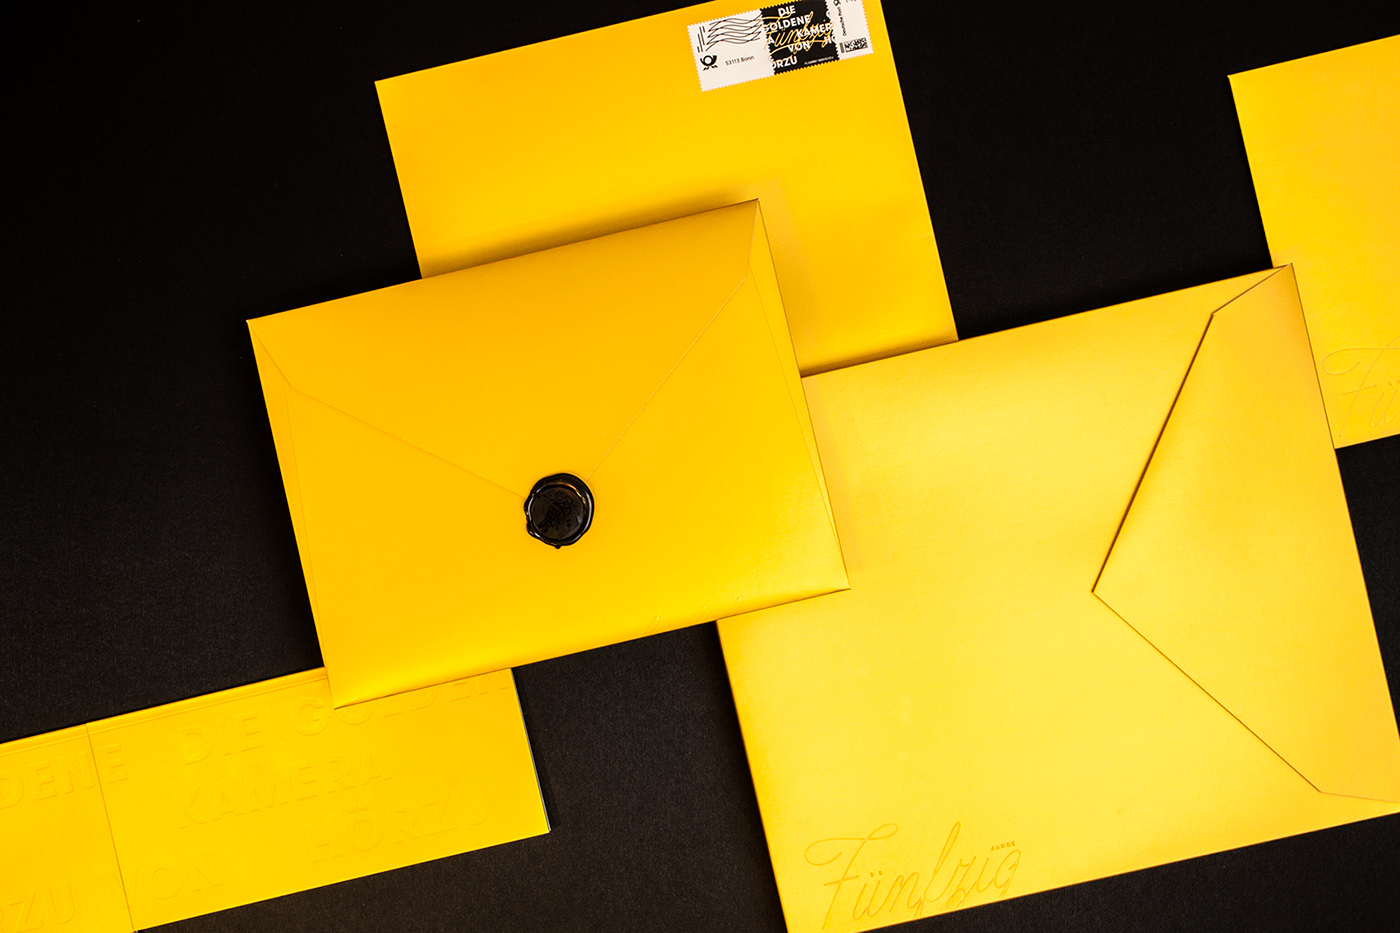 Goldene Kamera gold Hot Foil Blind Embossing stamps Goldbar black & white Invitation german oscars